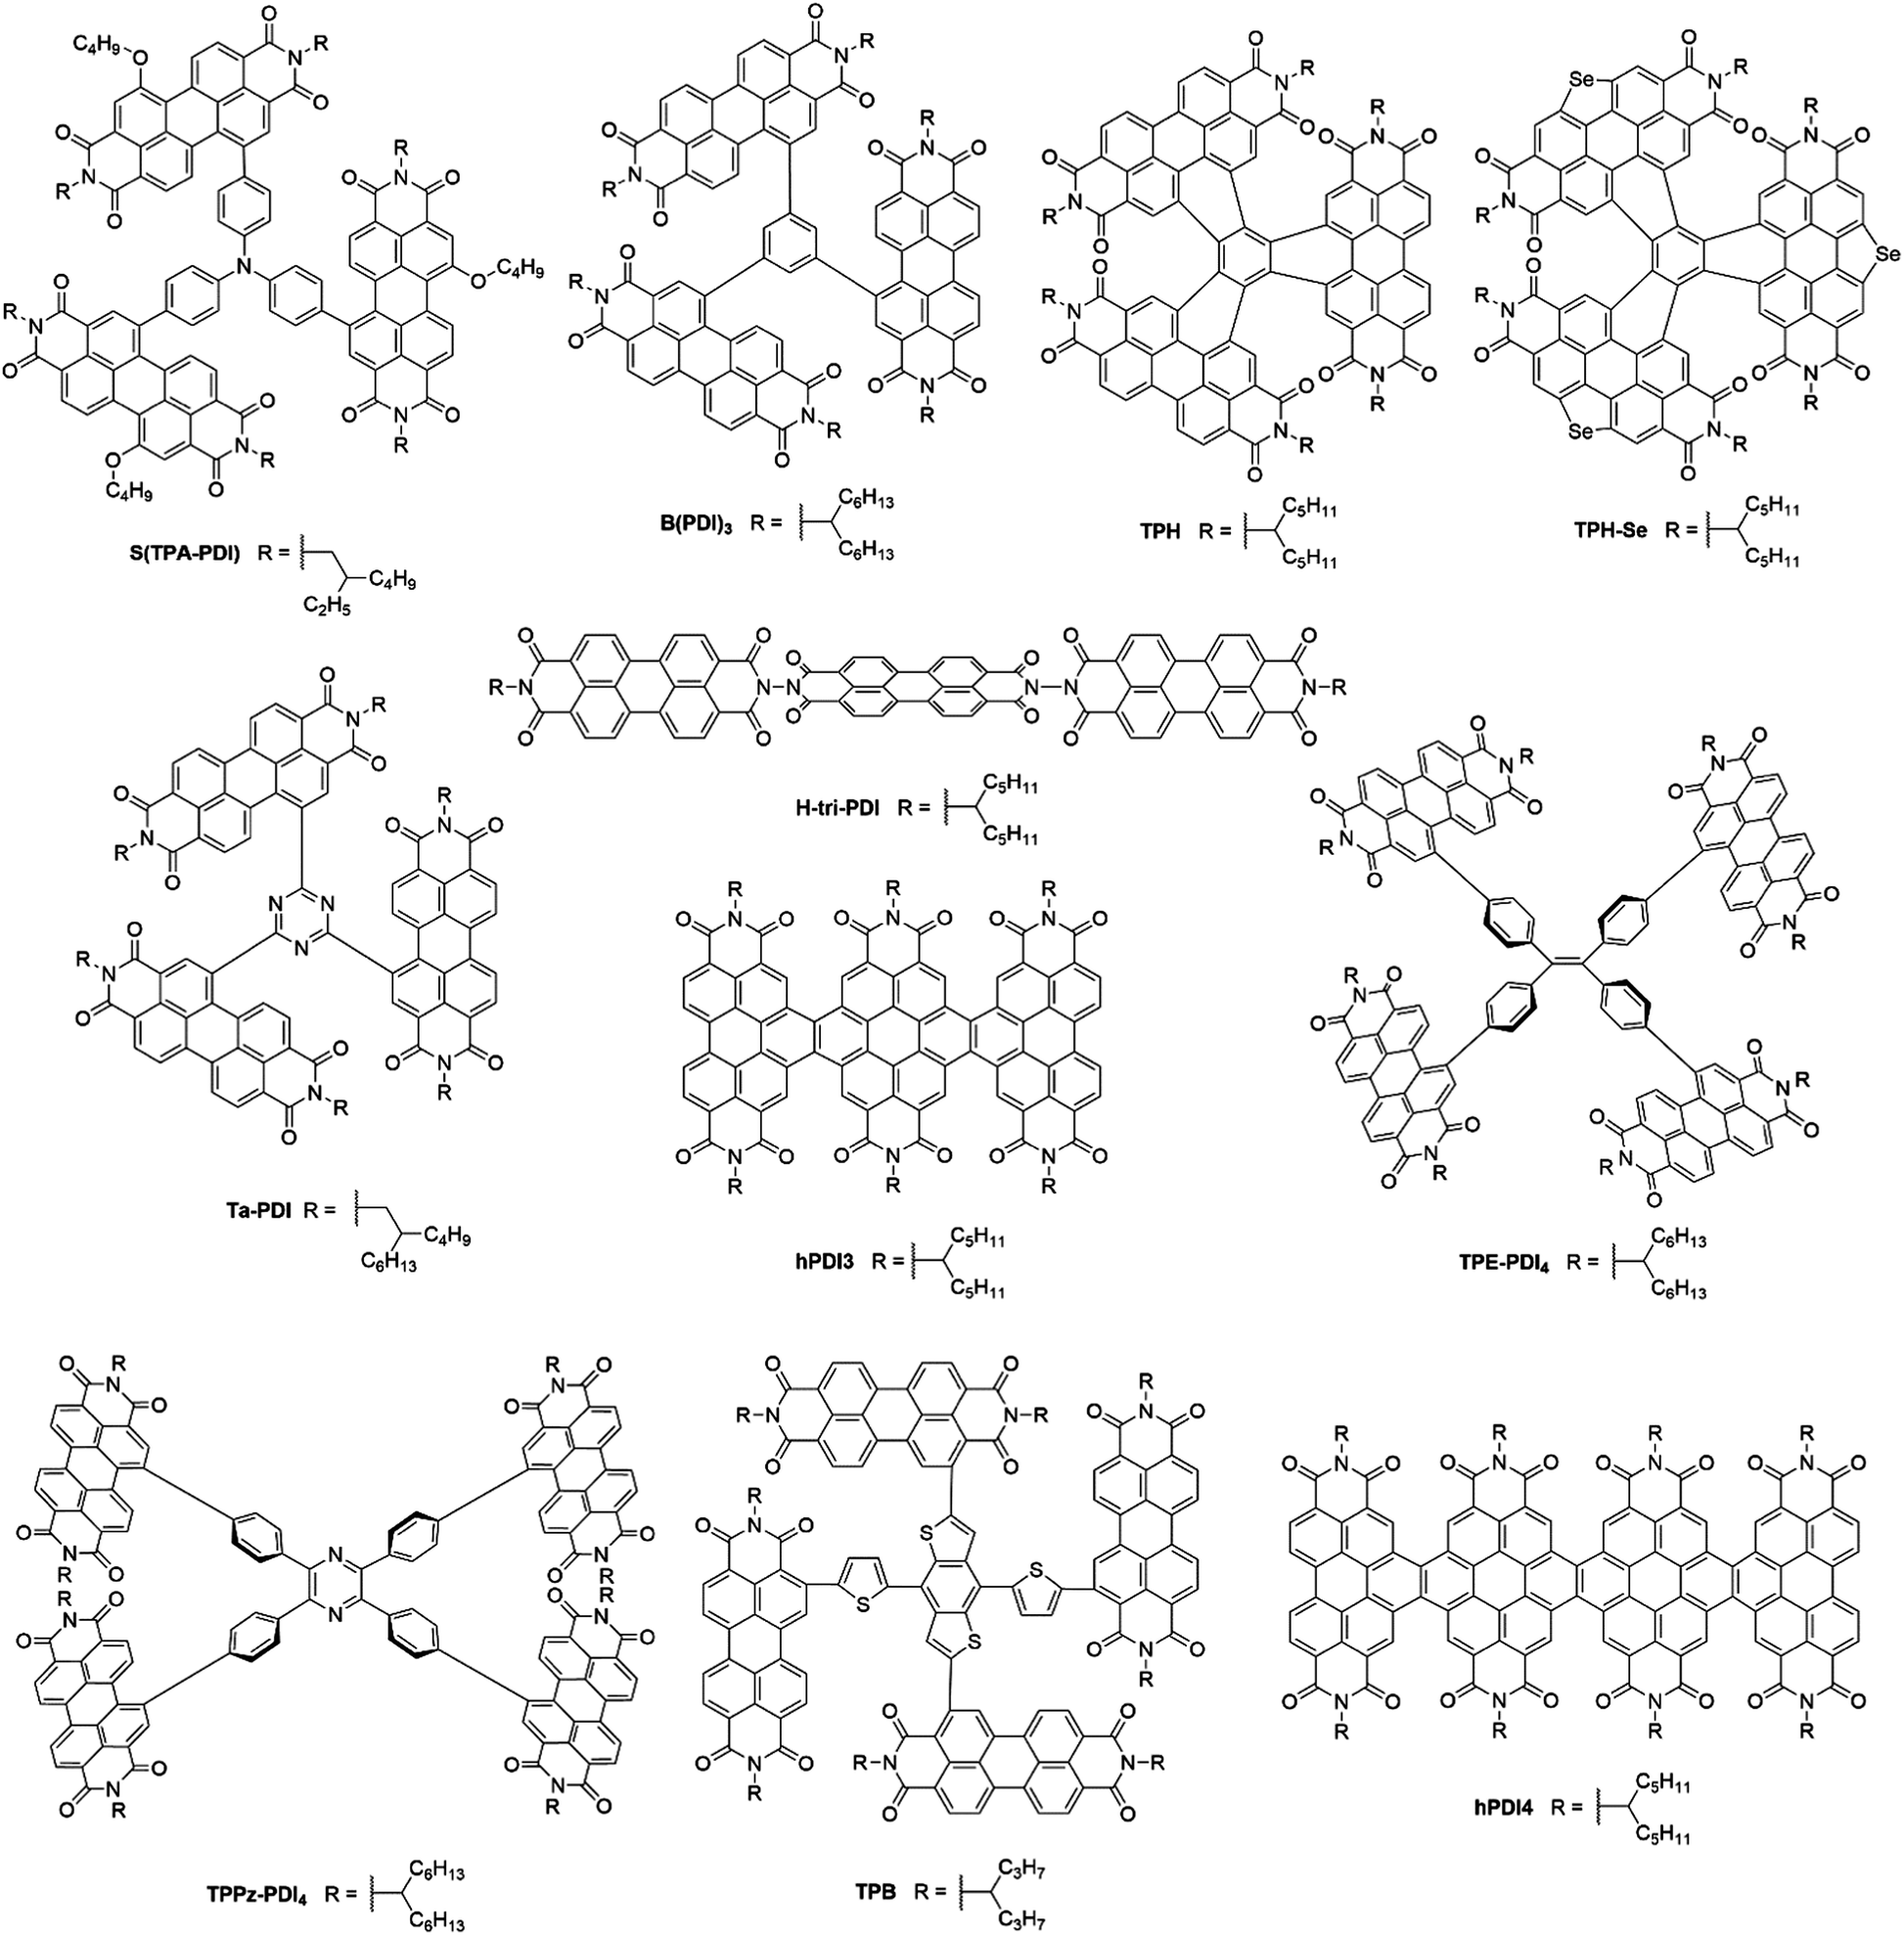 Critical review of the molecular design progress in non-fullerene electron  acceptors towards commercially viable organic solar cells - Chemical  Society Reviews (RSC Publishing)